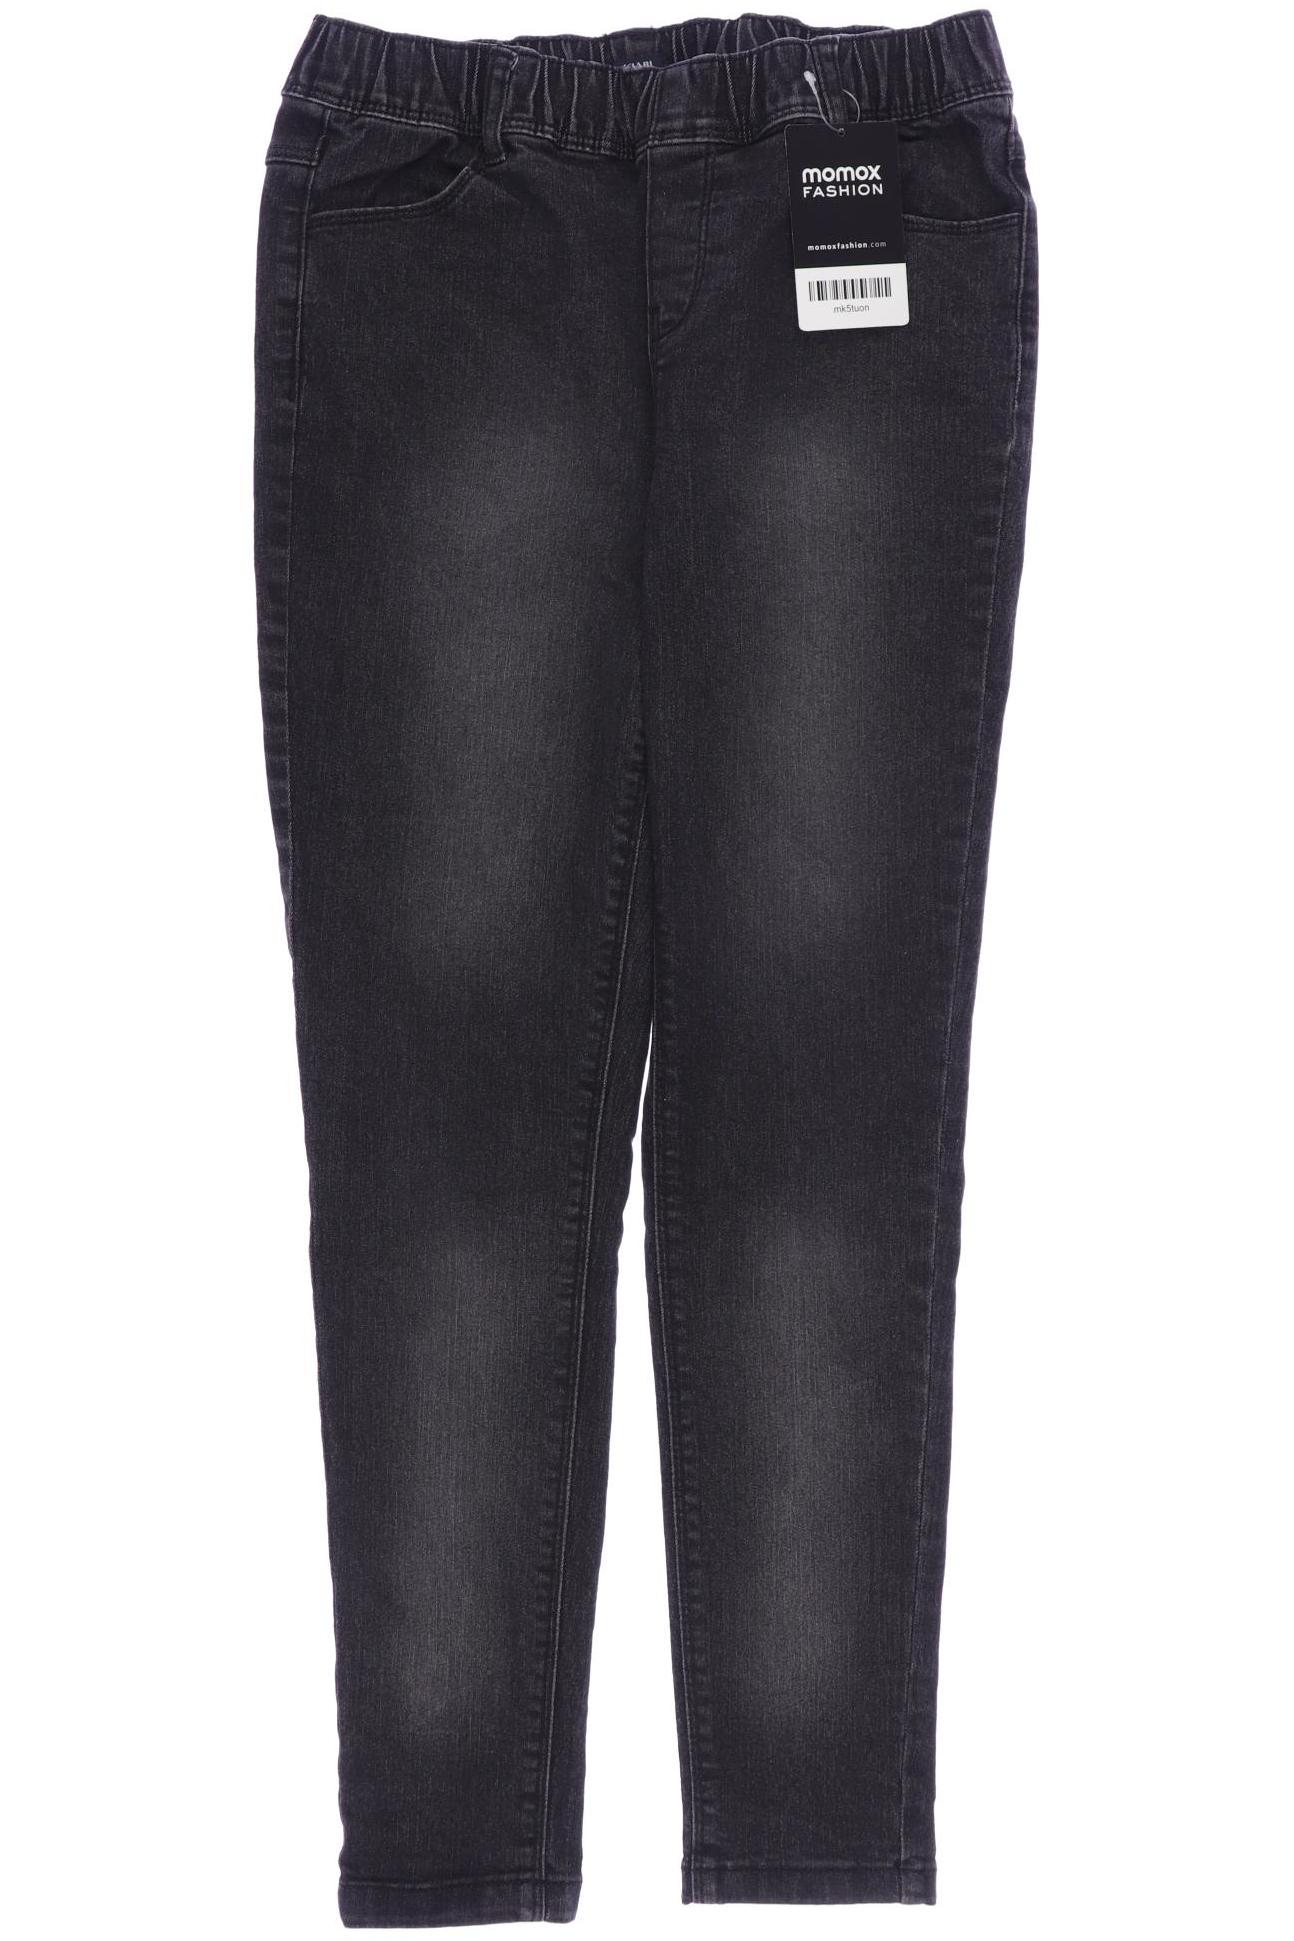 Kiabi Damen Jeans, schwarz, Gr. 146 von Kiabi